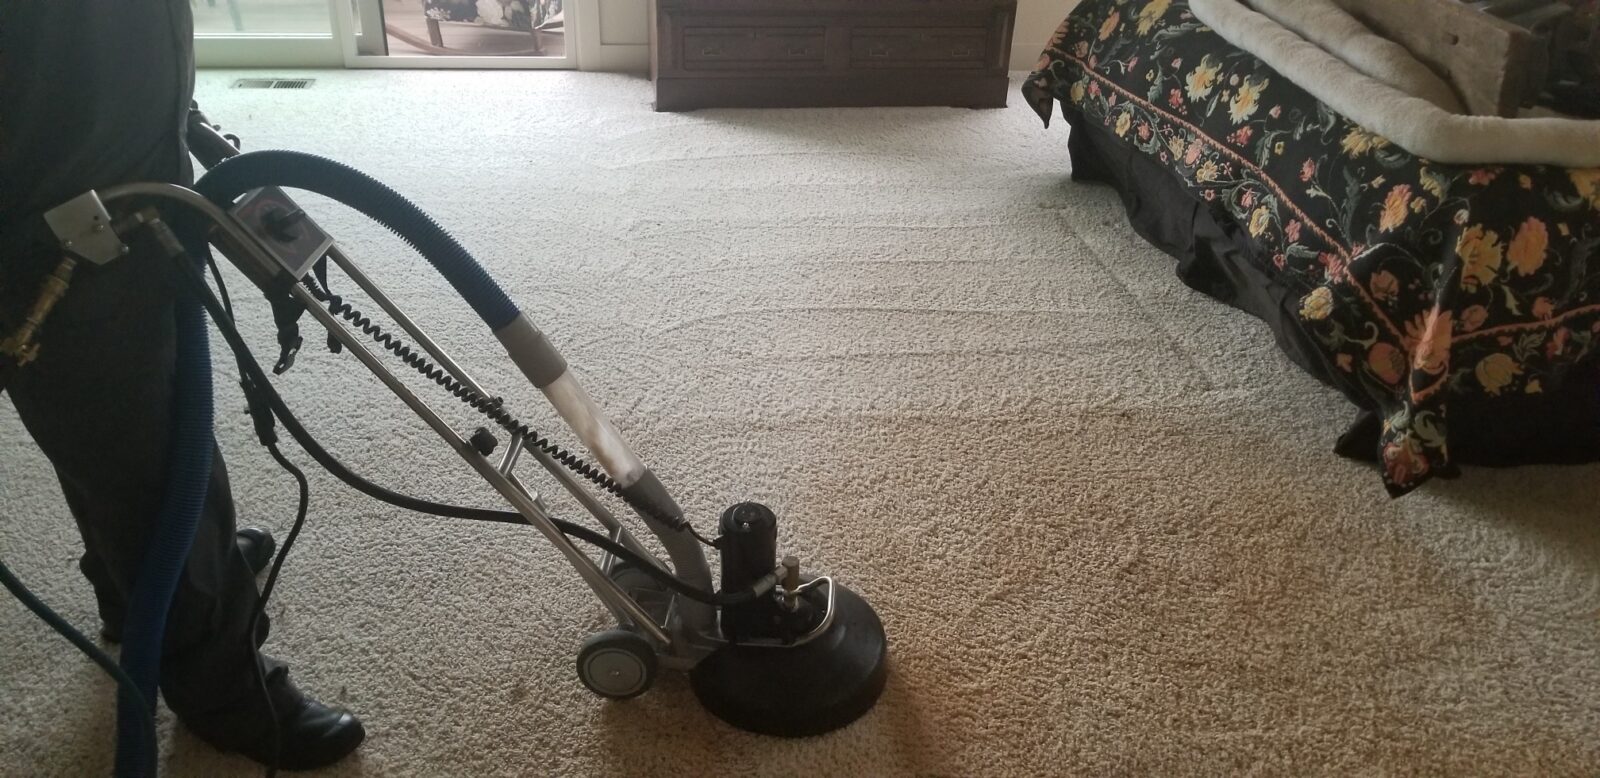 Carpet Cleaned